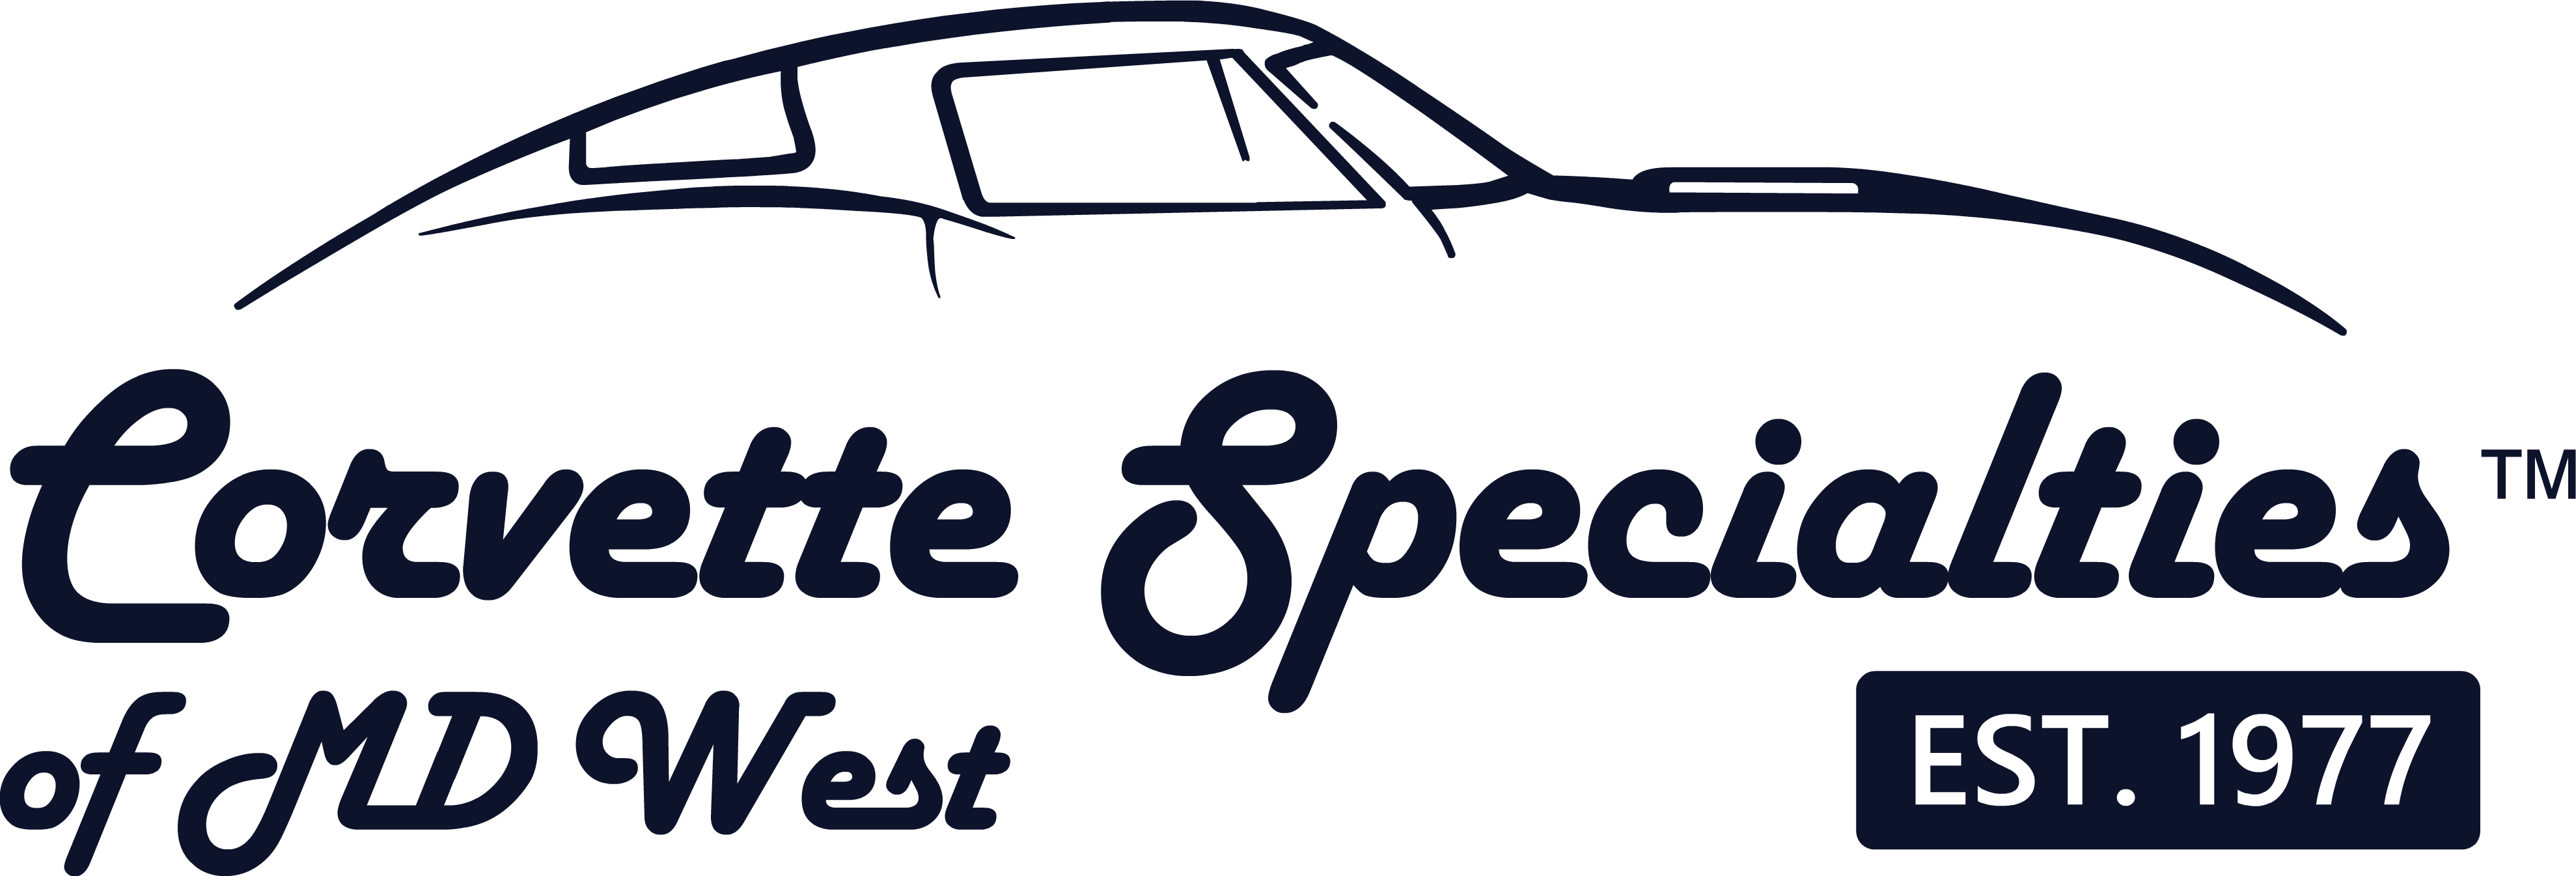 Corvette Parts And Restorations At Corvette Specialties - Race Car (3957x1345)